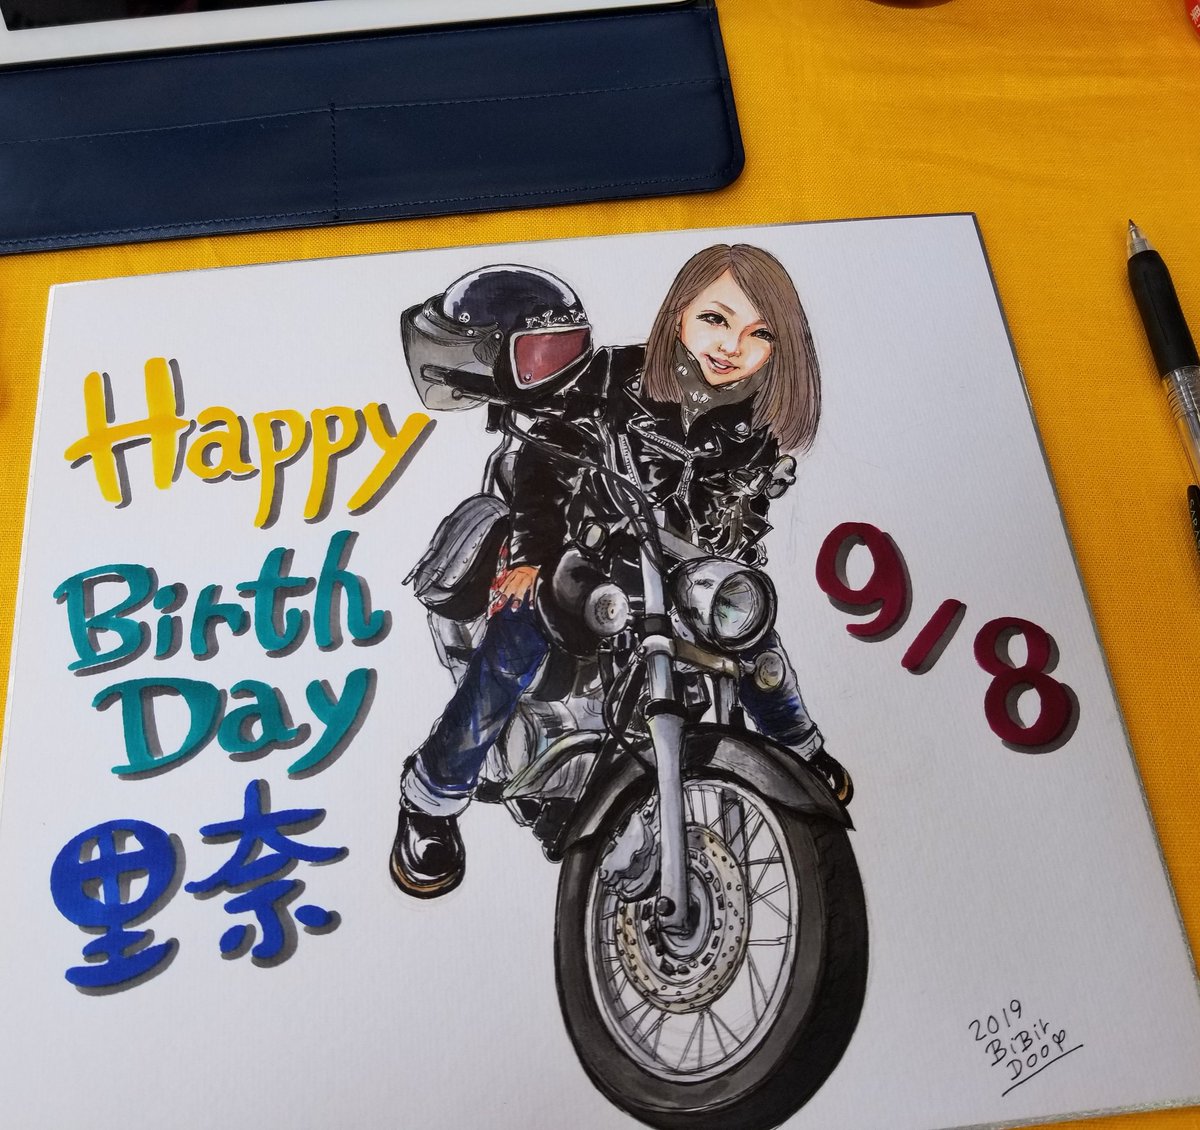 ট ইট র ビバドゥ 彼氏さんから彼女さんへ 誕生日のプレゼント 彼女のお顔の画像と バイクの画像を組み合わせて バイクに乗っている絵にしました 彼女さん Happy Birthday 誕生日 Happybirthday 彼氏 彼女 プレゼント バイク バイク女子